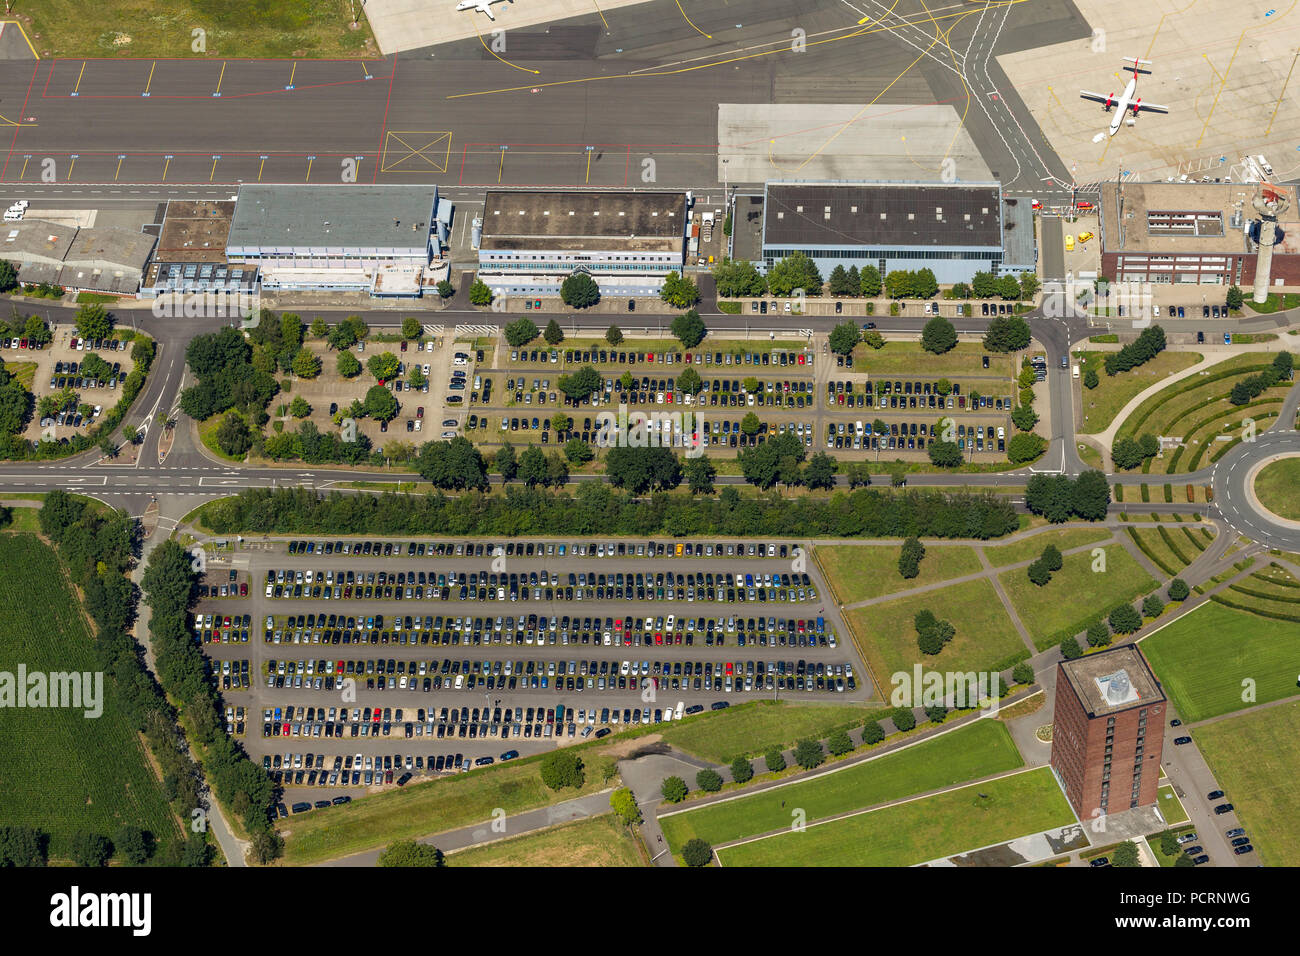 Aerial view, airport Münster-Osnabrück, runway, parking garages, parking lots Stock Photo